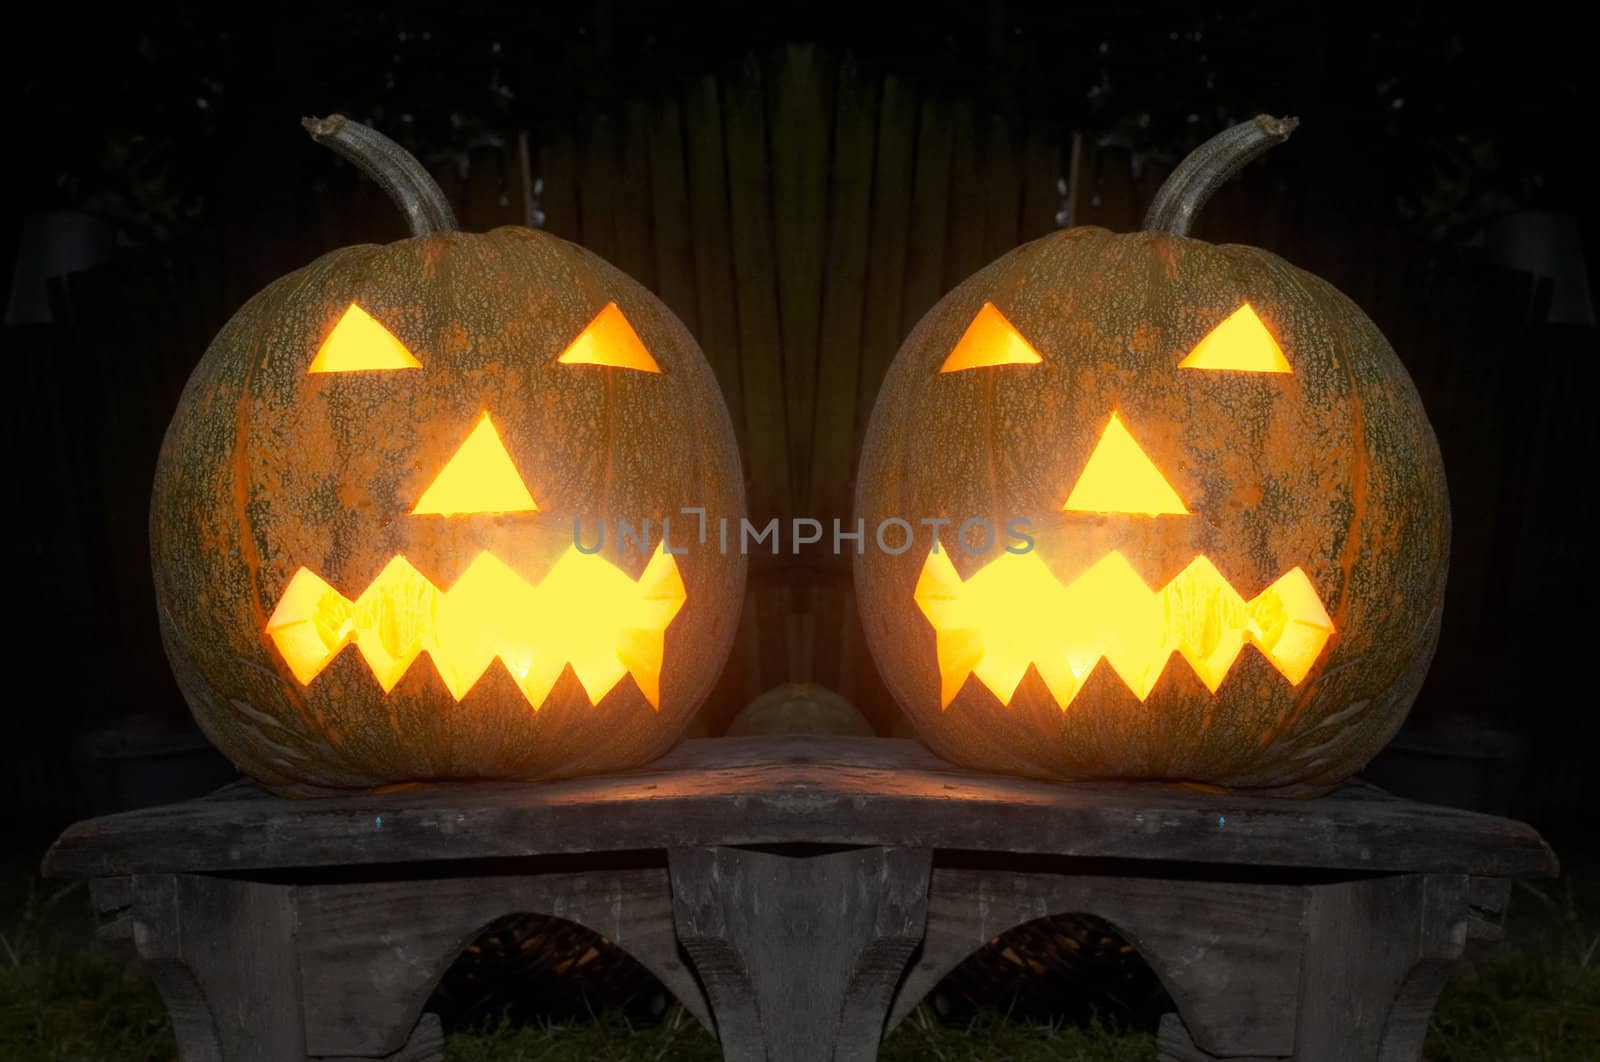 Shining face being cut in a pumpkin